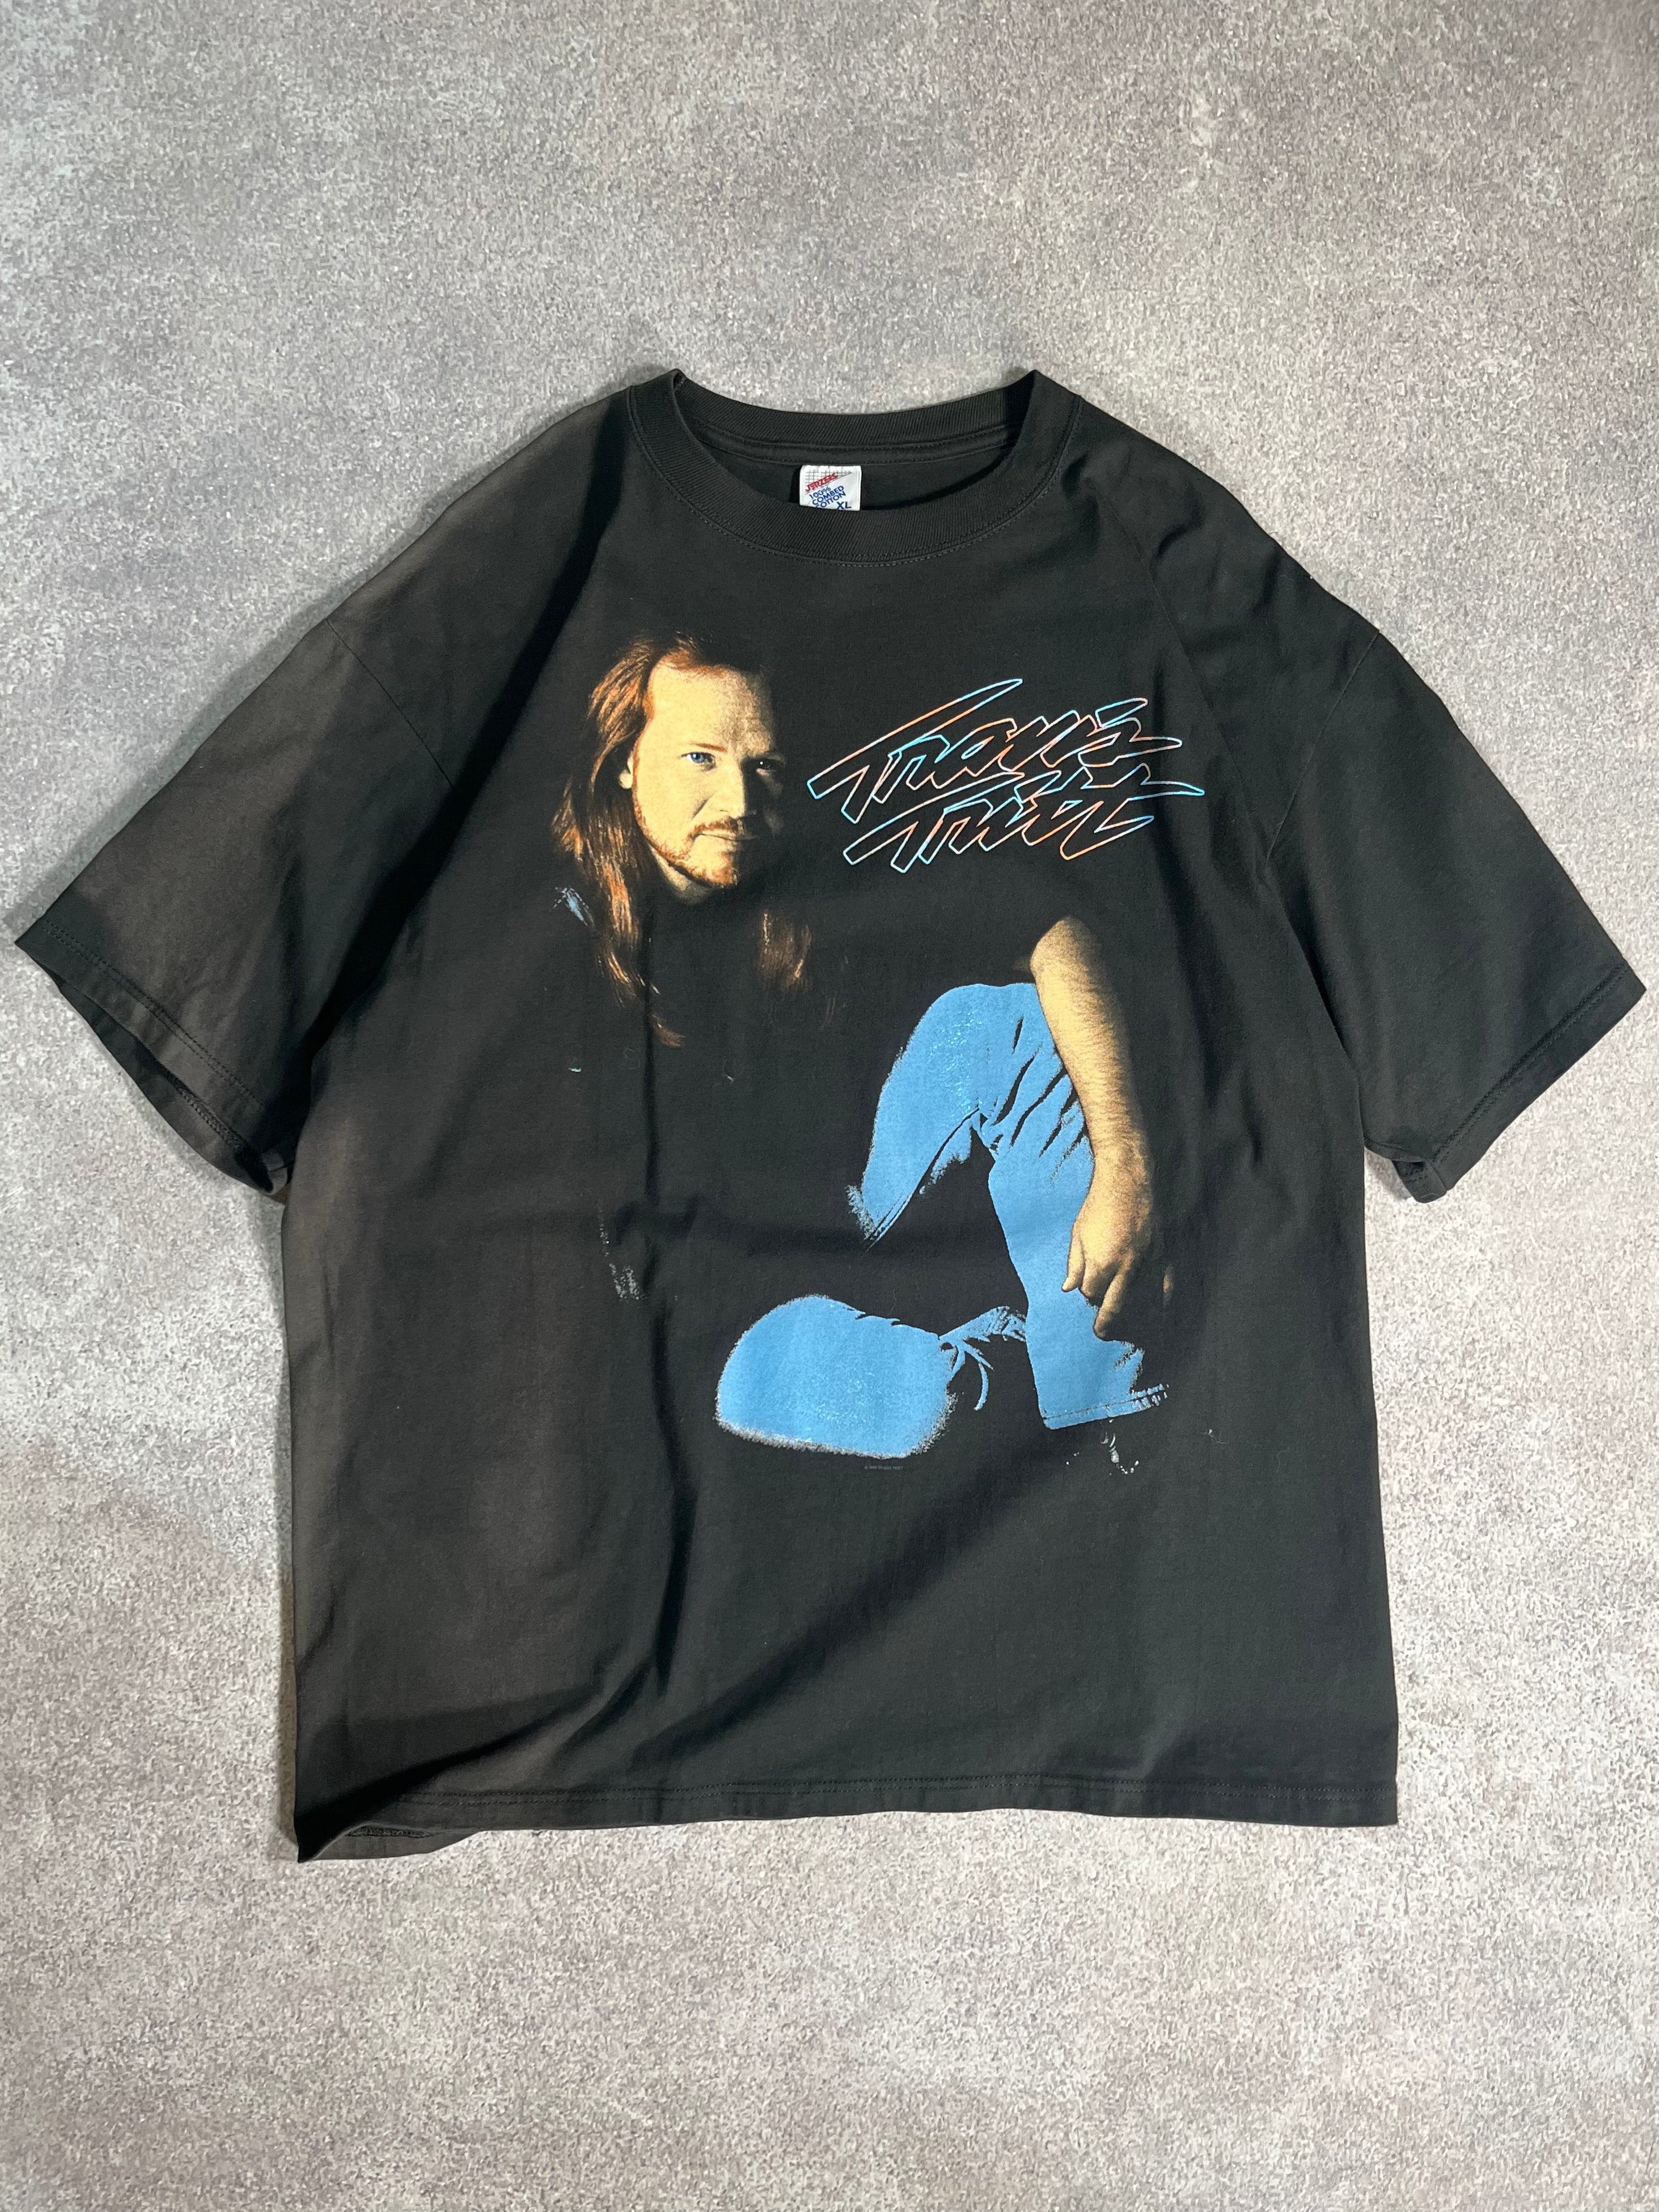 Vintage Travis Tritt T Shirt Black // X-Large - RHAGHOUSE VINTAGE